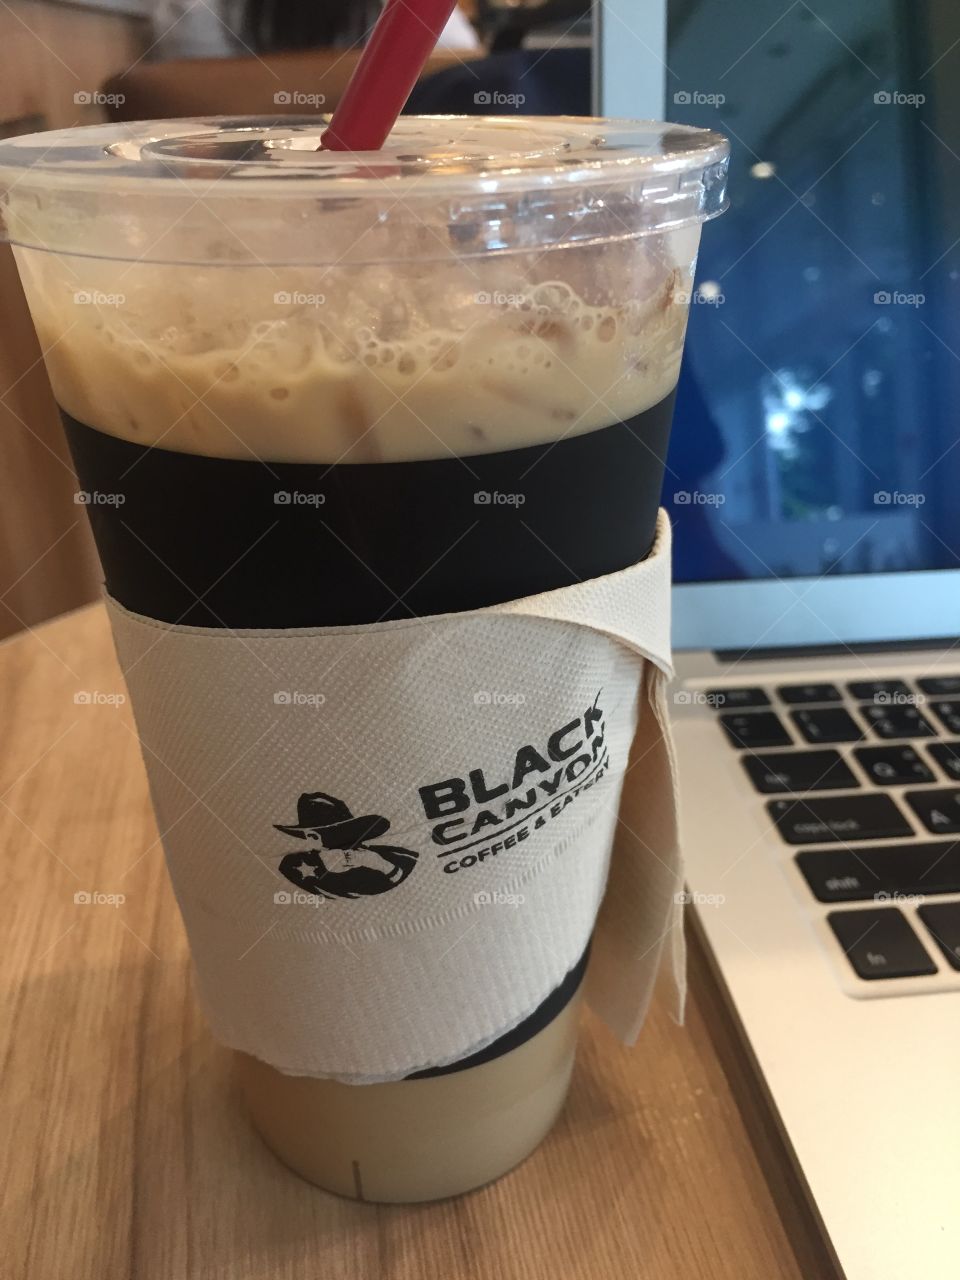 Black canyon coffee